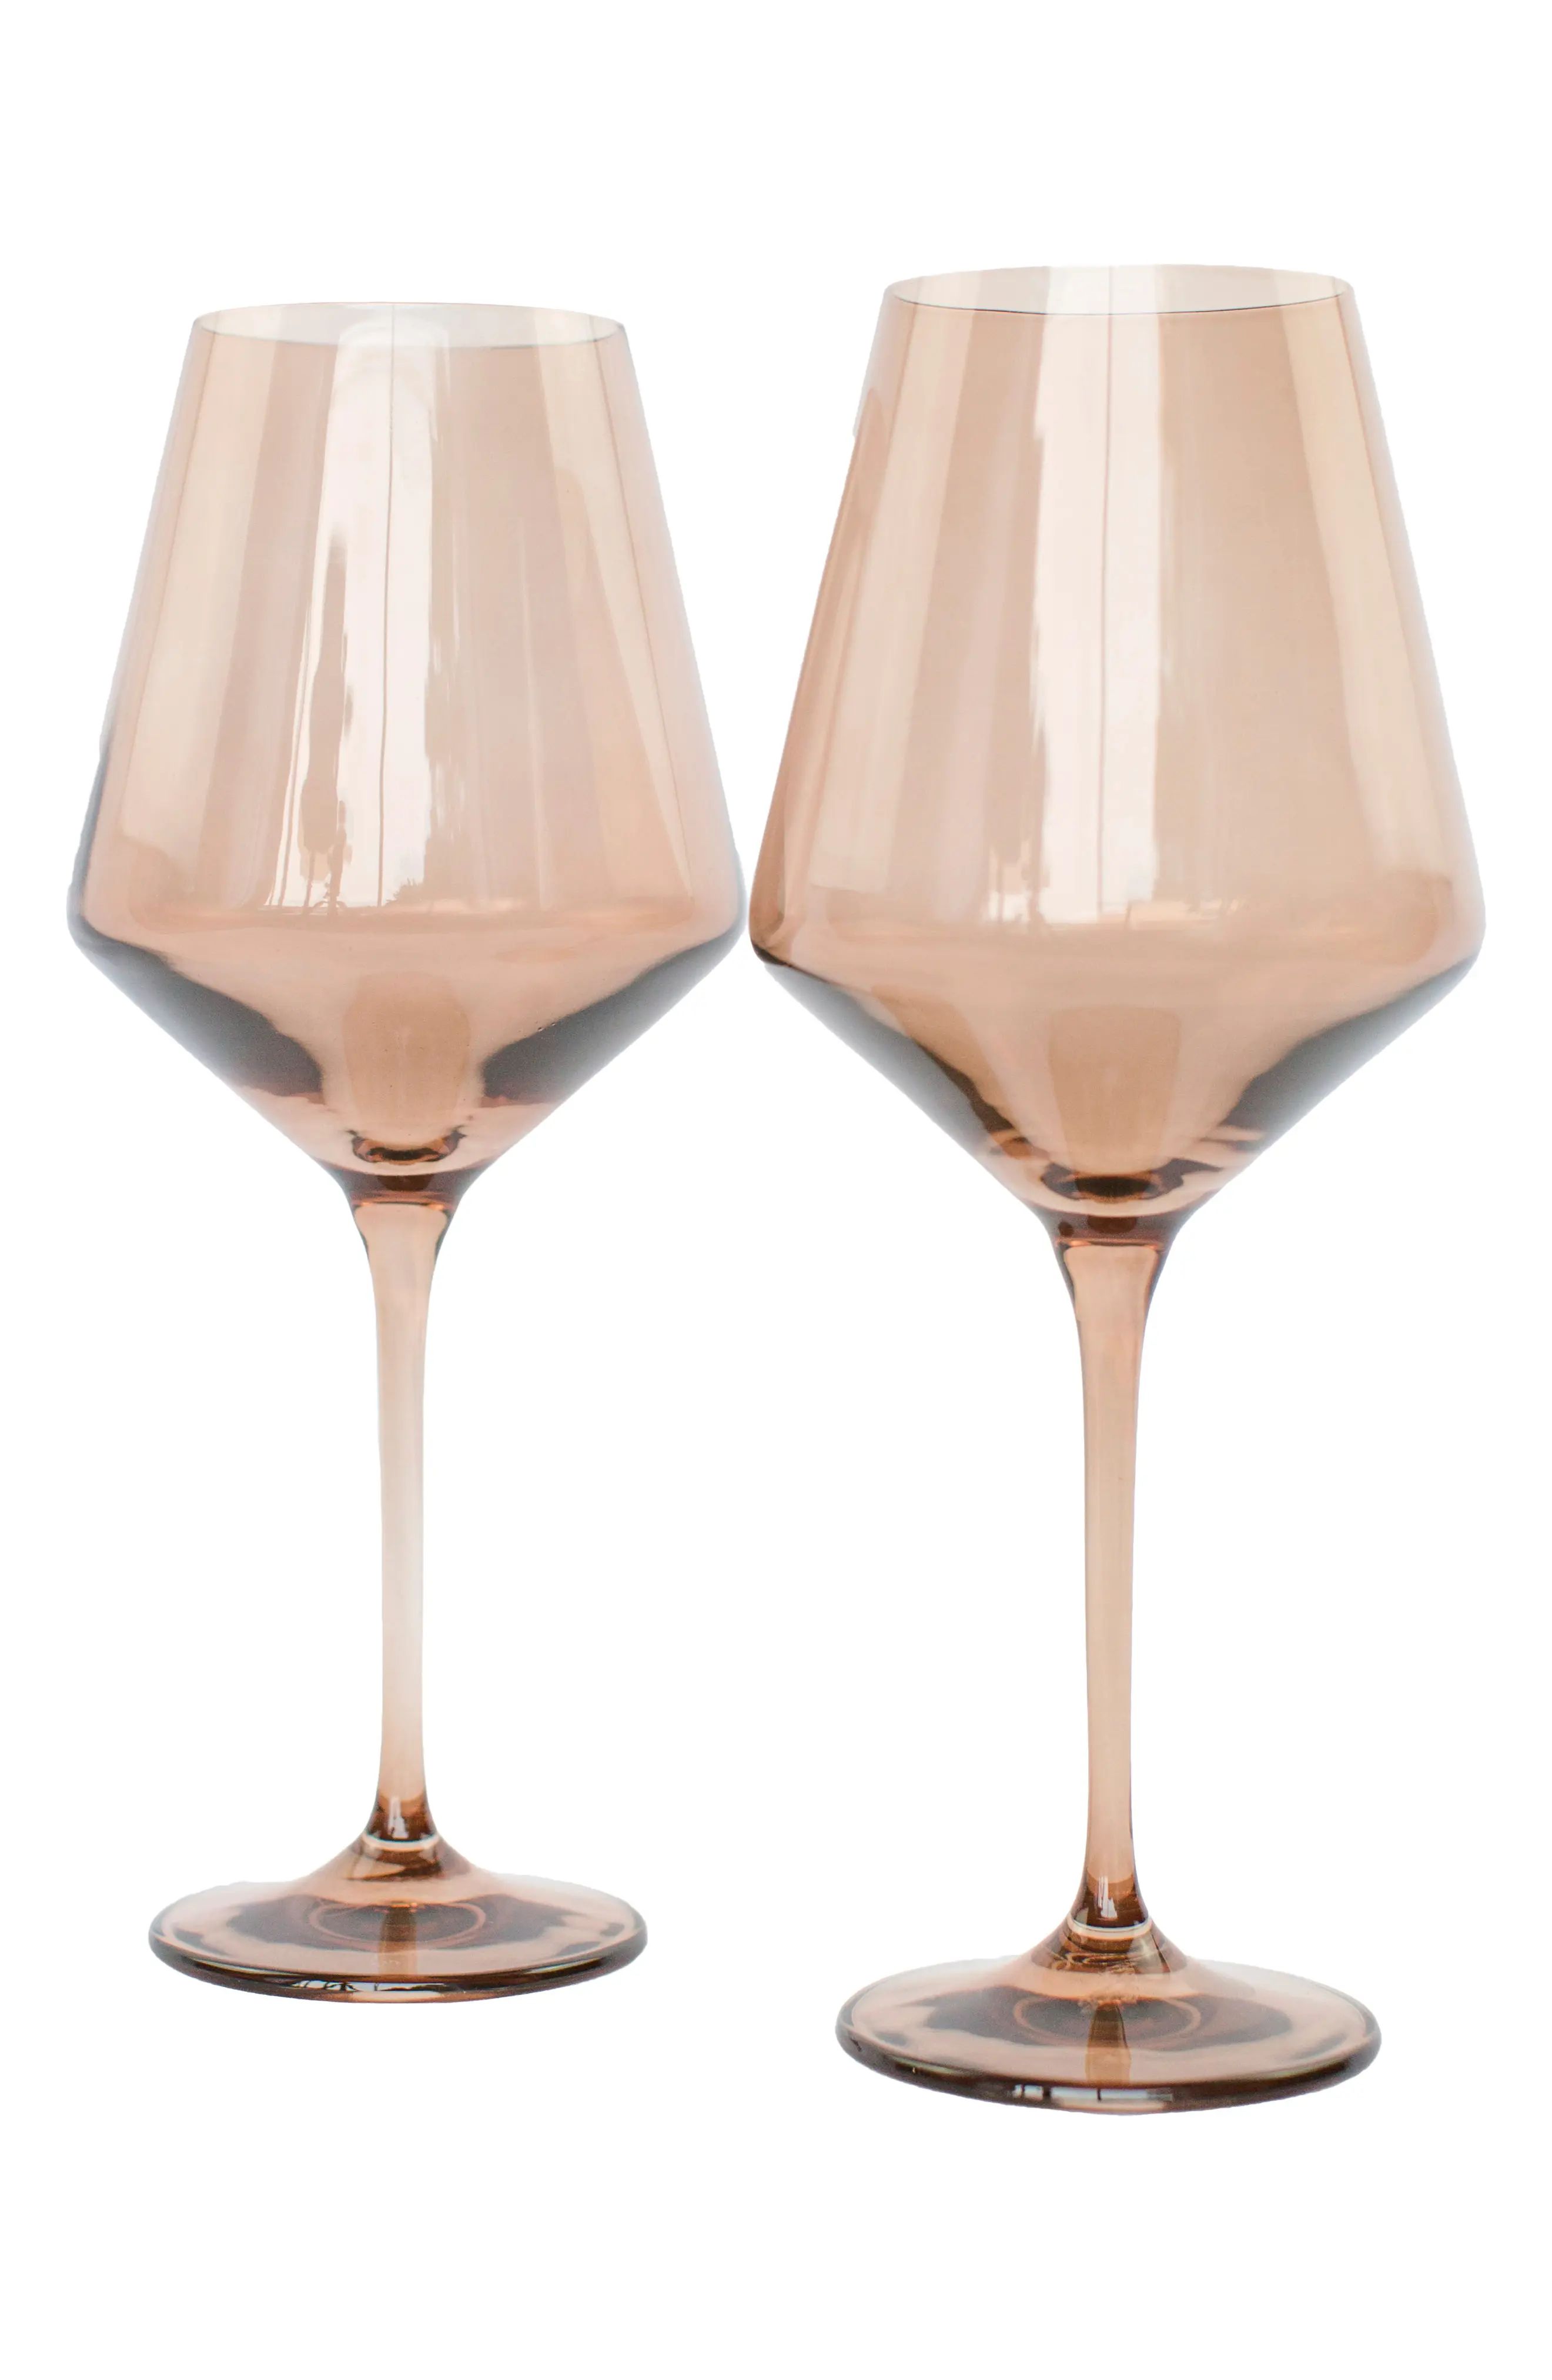 Estelle Colored Glass Set of 2 Stem Wineglasses in Amber Smoke at Nordstrom | Nordstrom